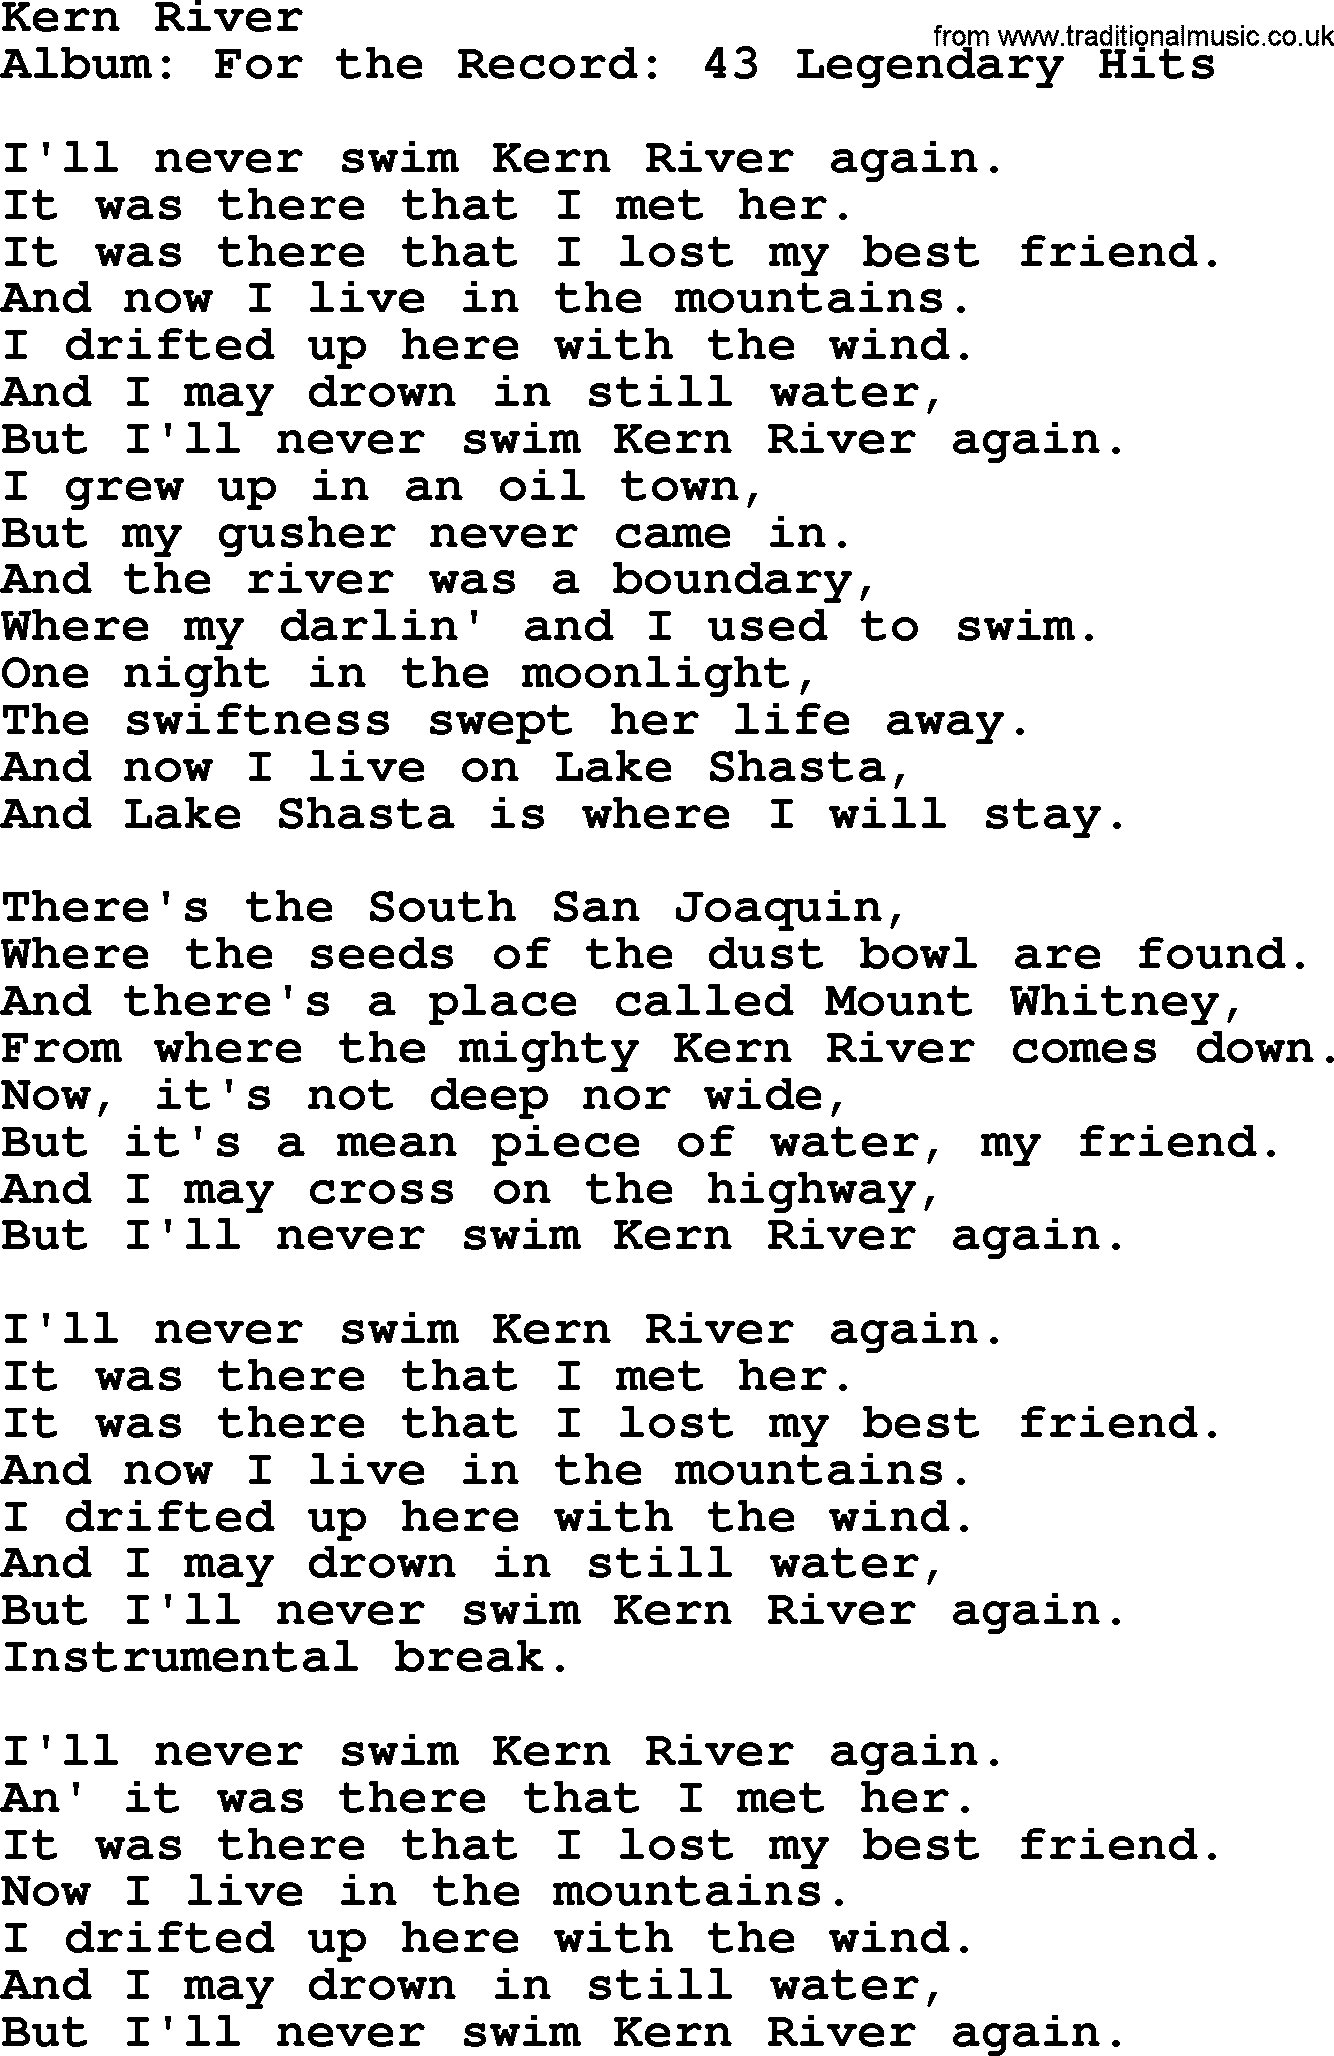 Merle Haggard song: Kern River, lyrics.